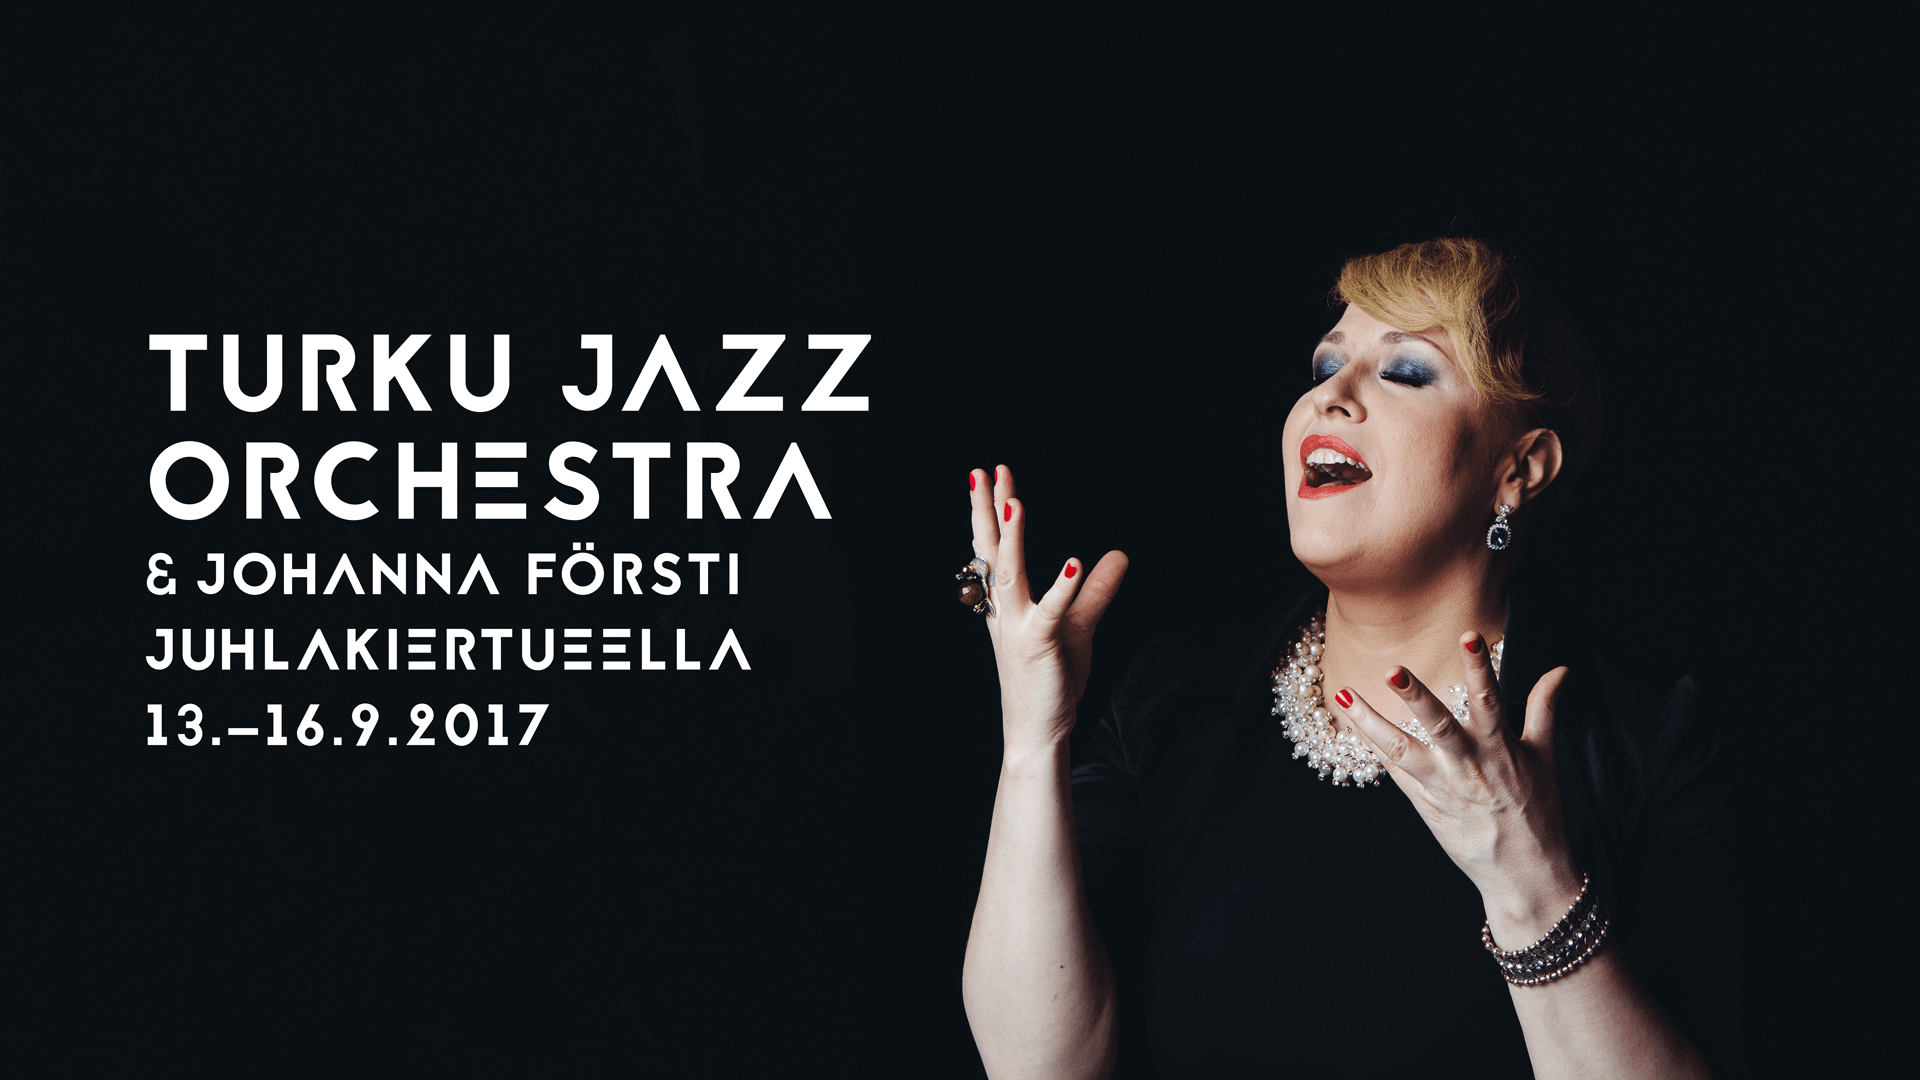 Featured image for “Turku Jazz Orchestra & Johanna Försti, Fort Big Band & Charlotta Kerbs”